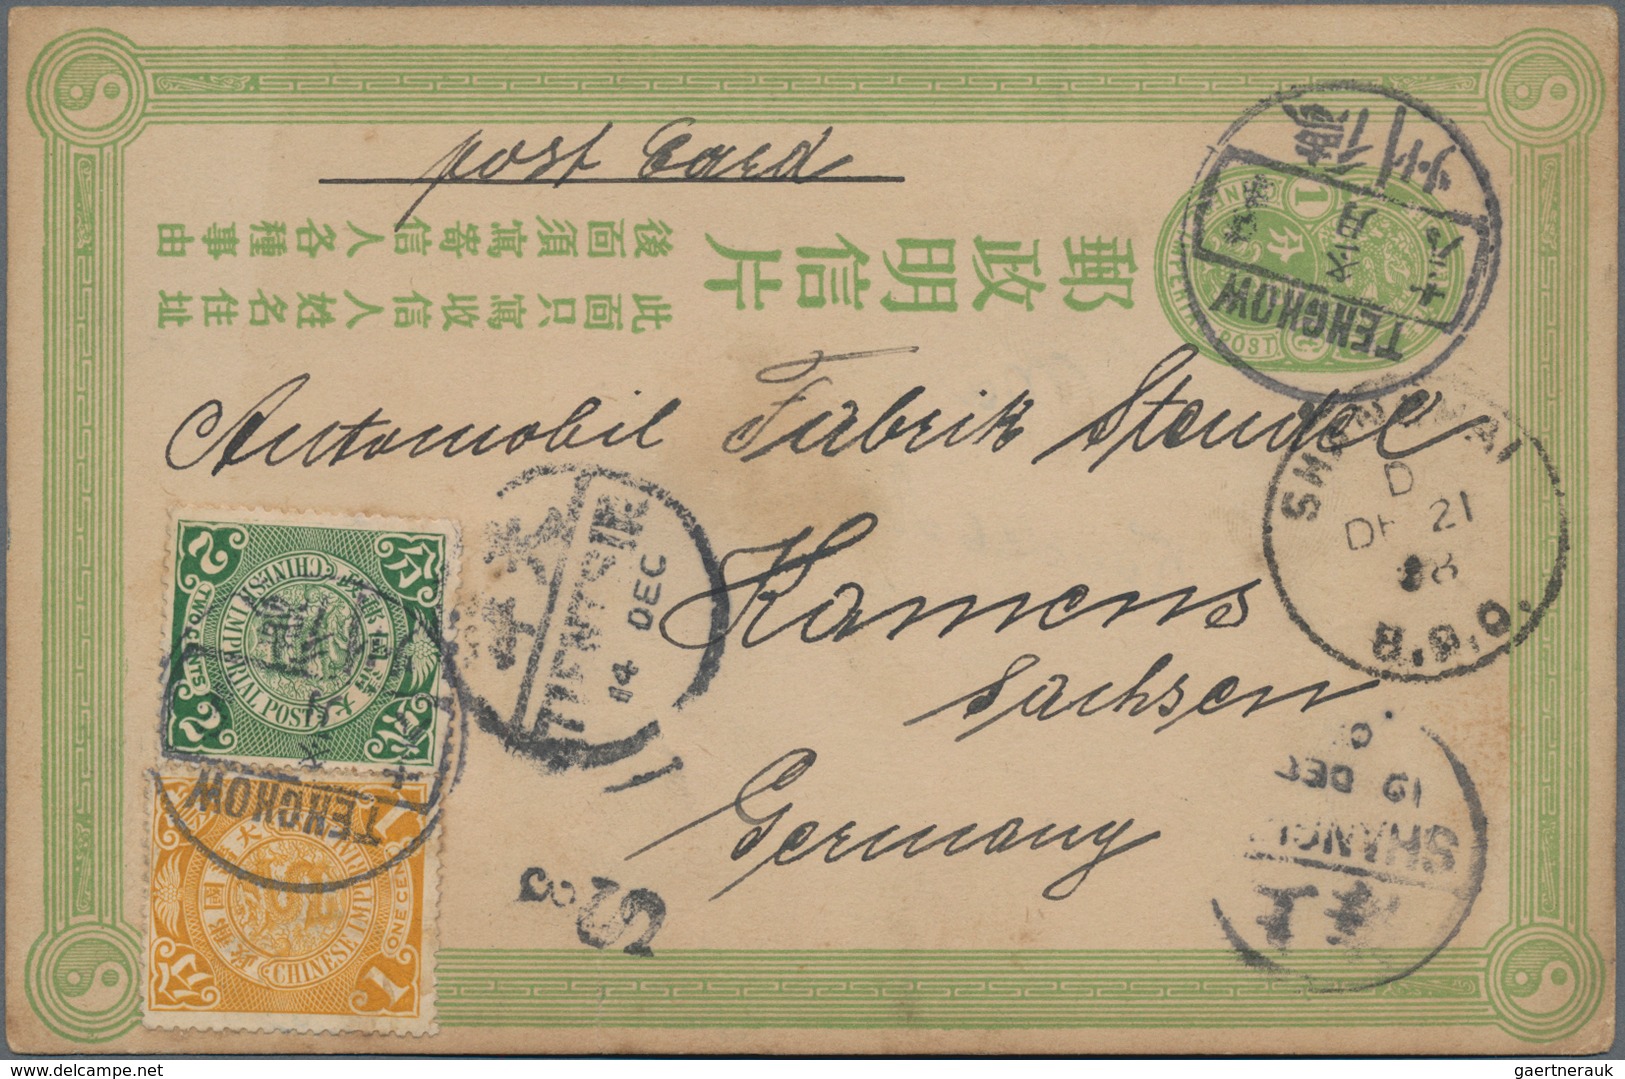 China - Ganzsachen: 1907, Card CIP 1 C Light Green Uprated Coiling Dragon 1 C., 2 C. Green Canc. Box - Cartes Postales